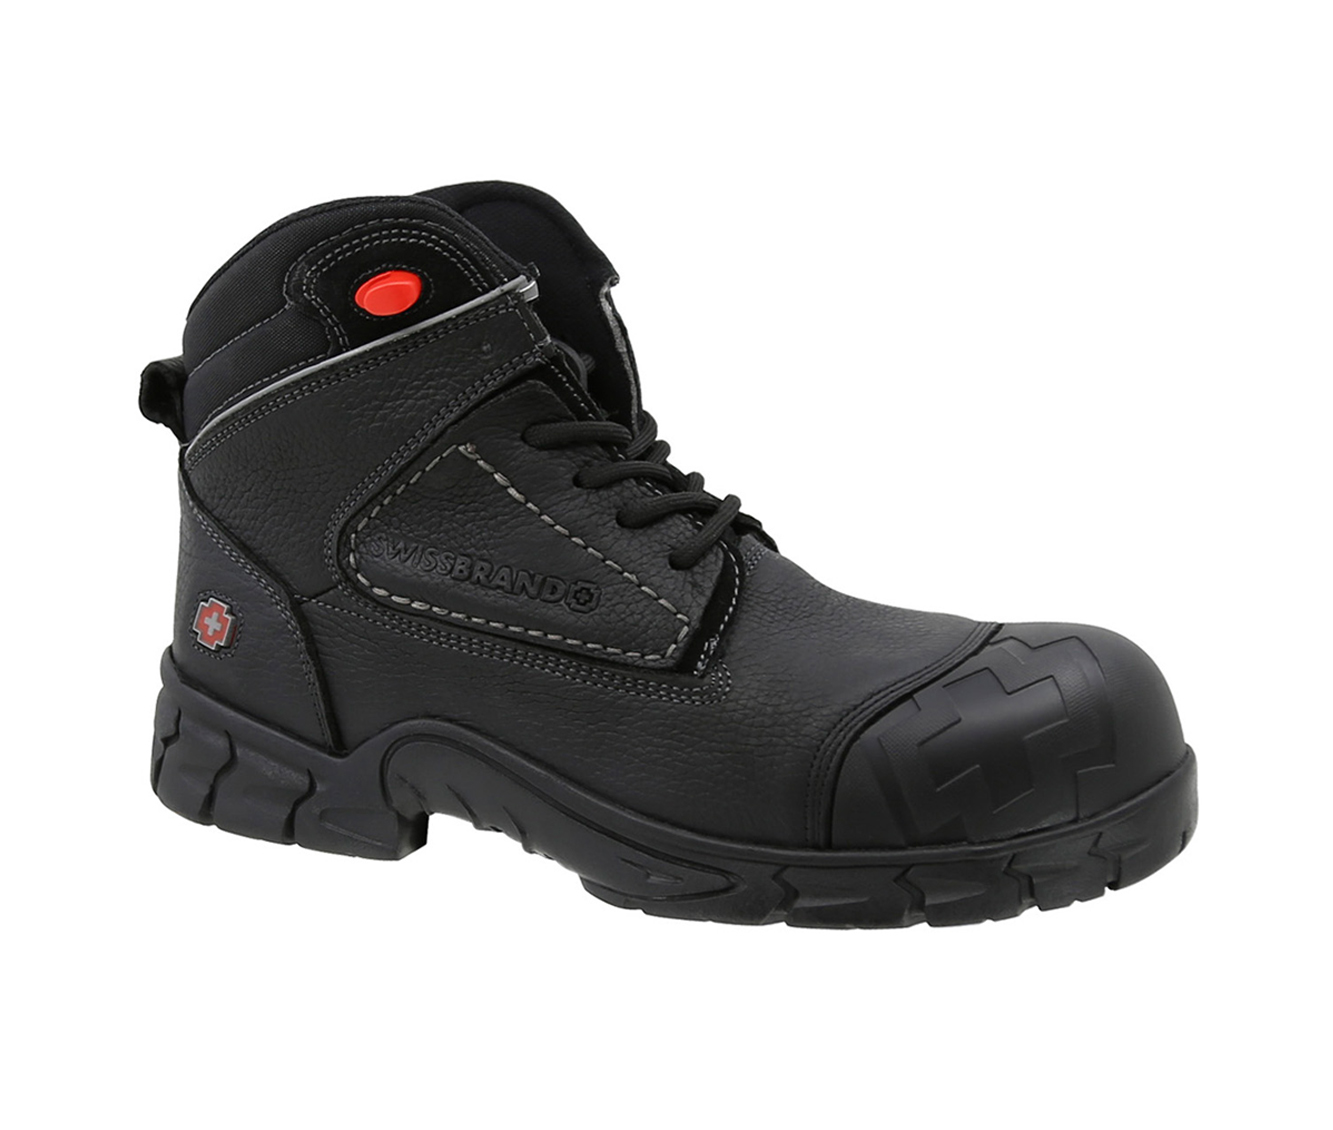 Swissbrand Boots, Slip Resistant Shoes | Shoe Carnival